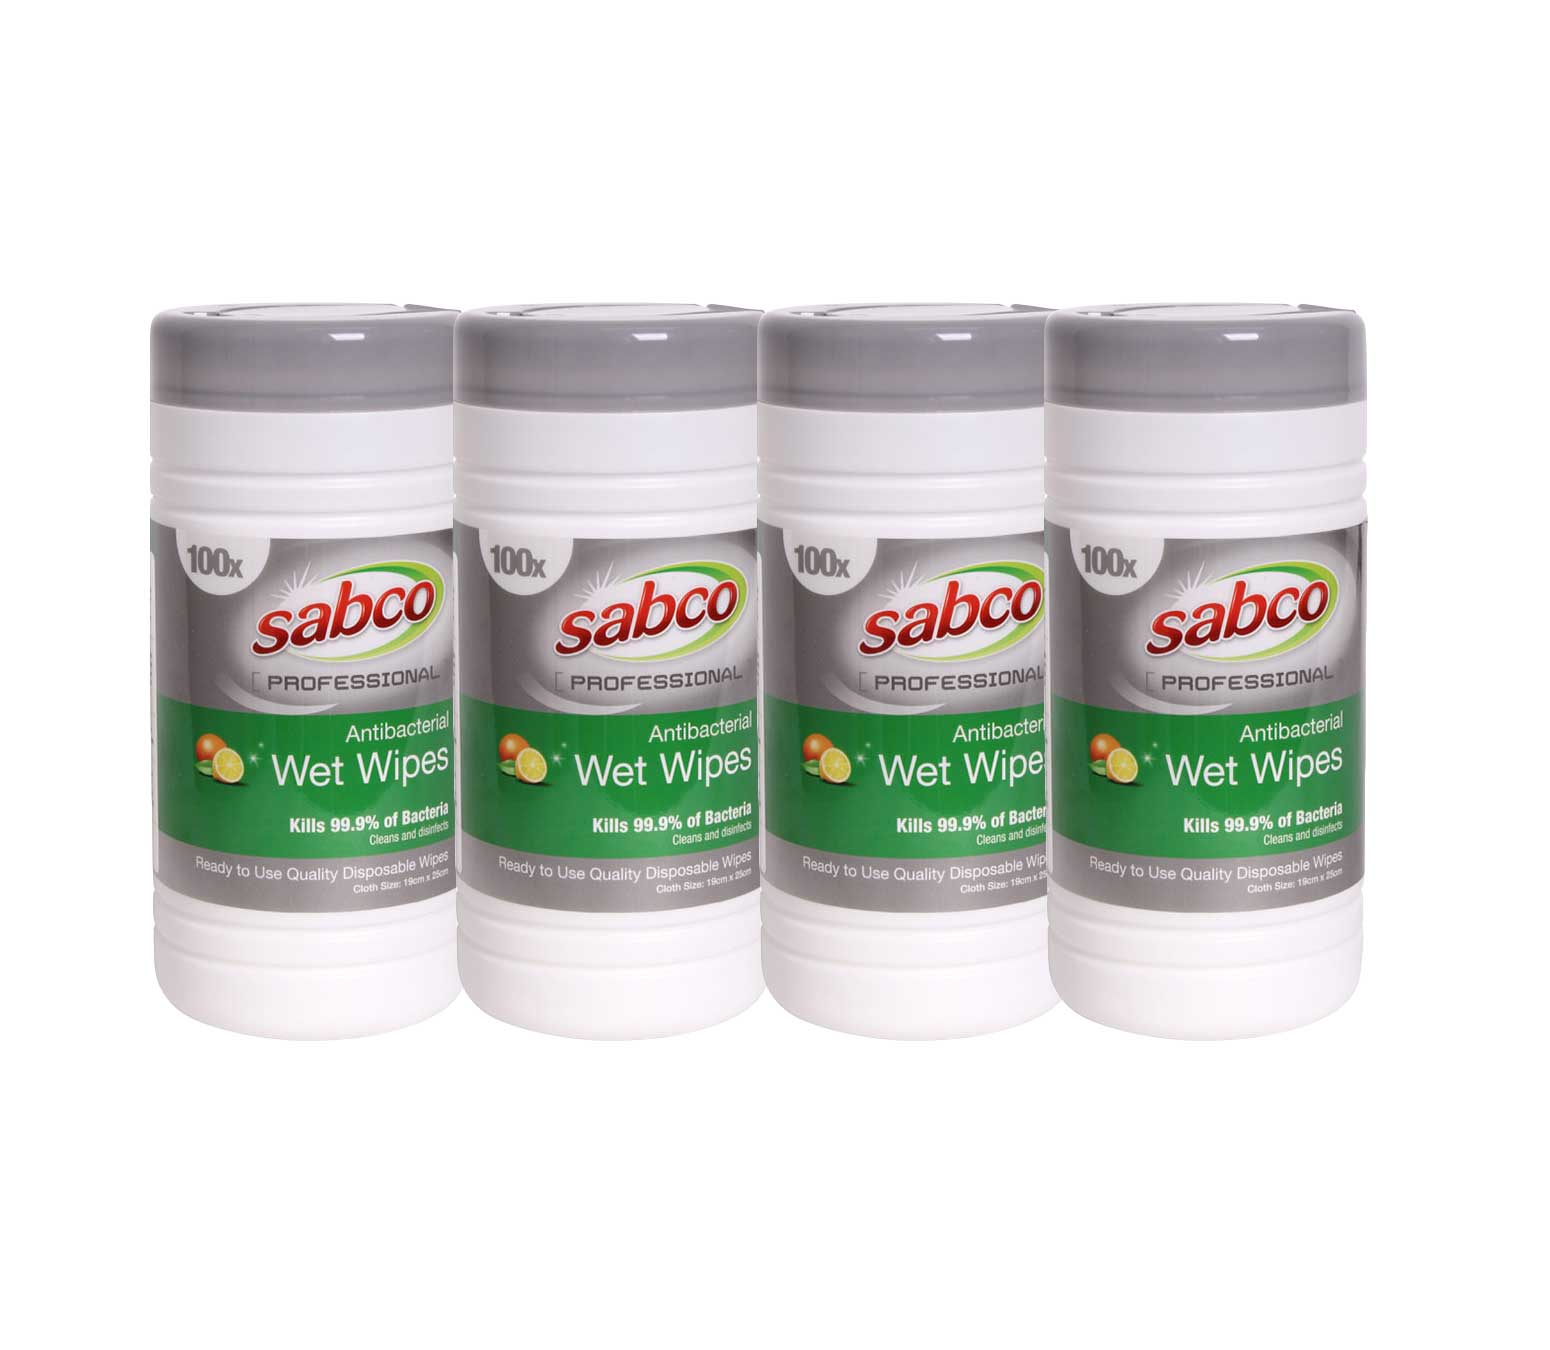 Sabco Antibacterial Wet Wipes 100pk.